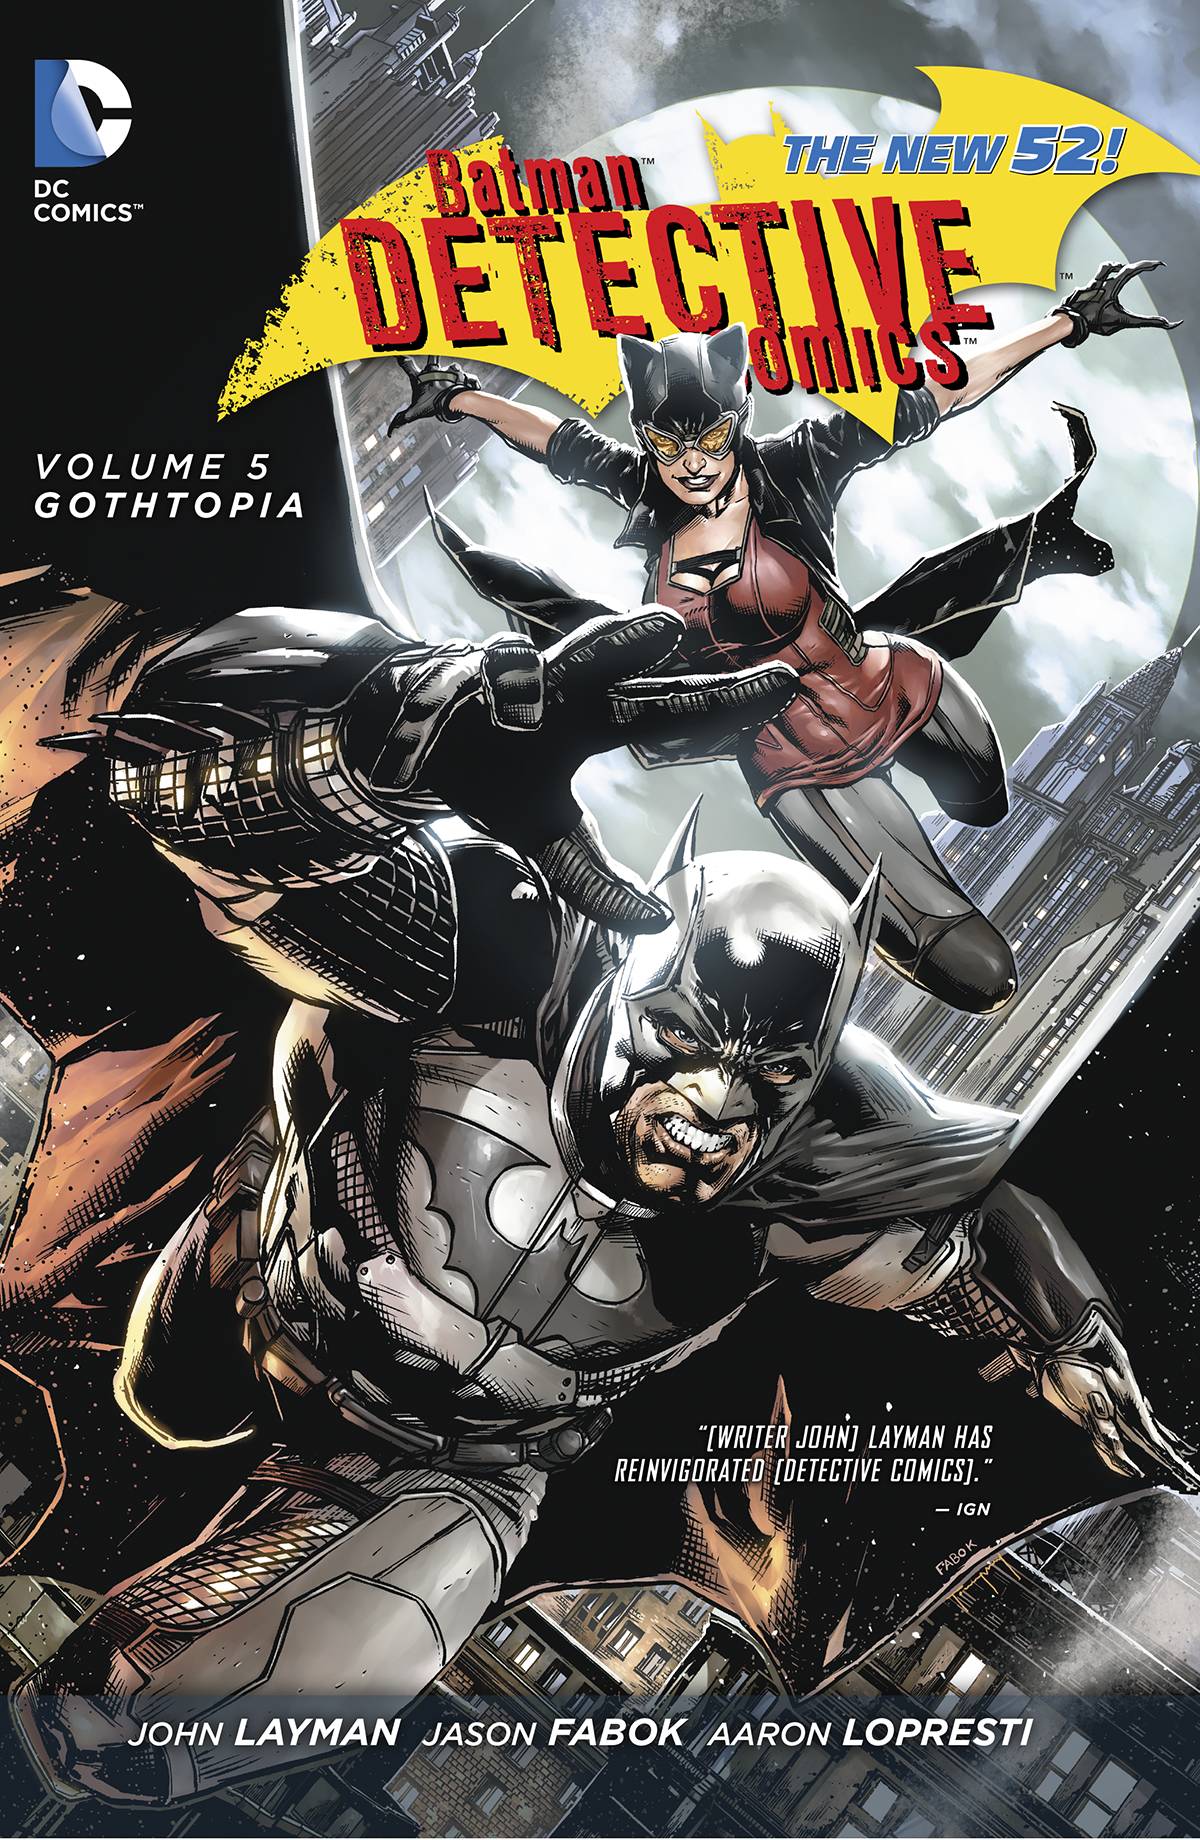 Batman Detective Comics Graphic Novel Volume 5 Gothopia (New 52)